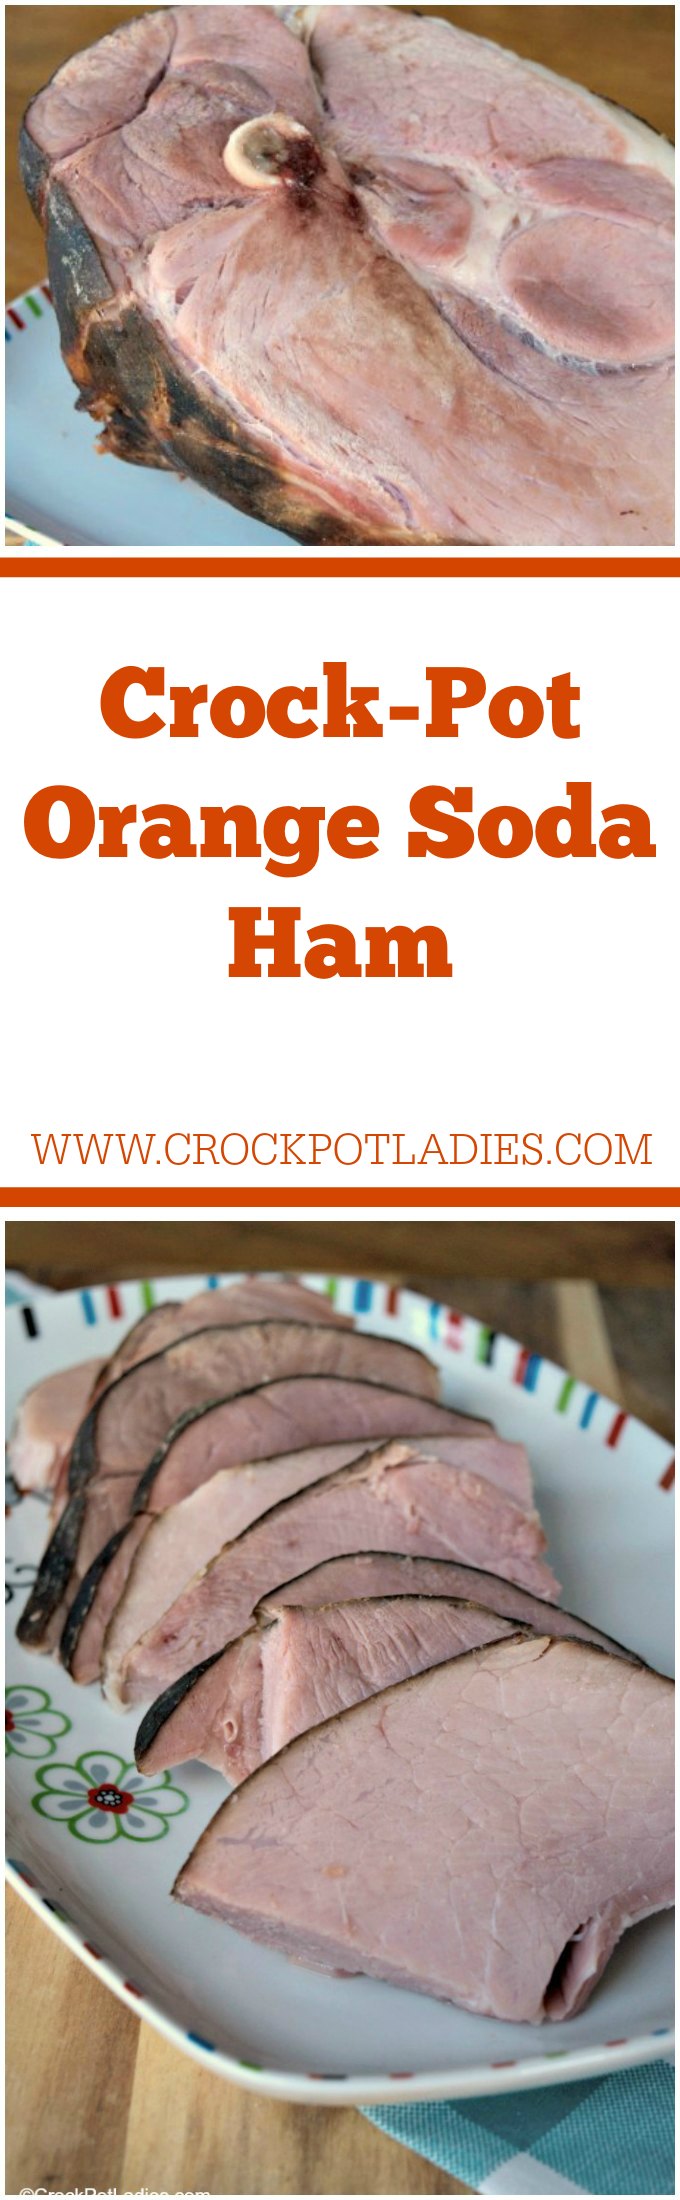 Crock-Pot Orange Soda Ham